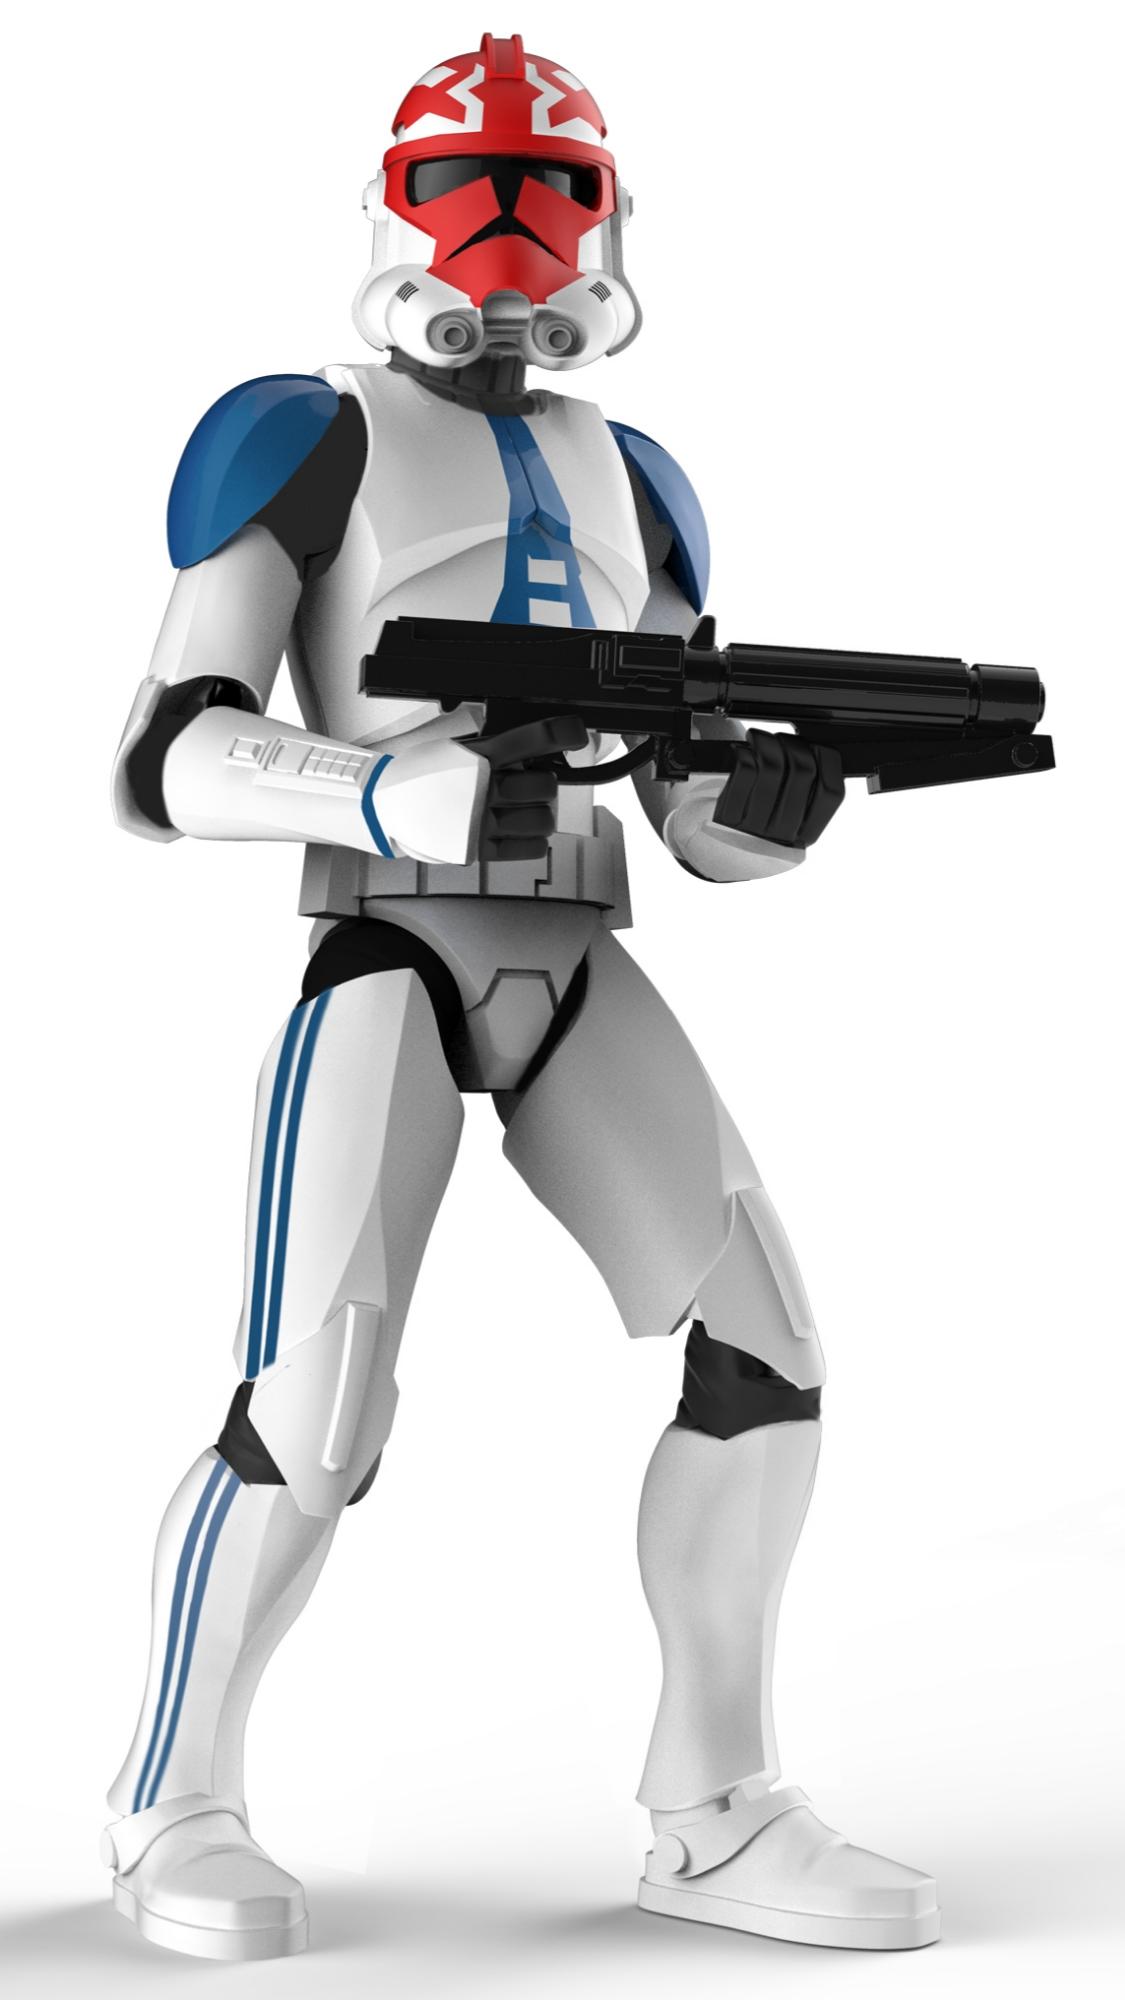 501st clone trooper action figure